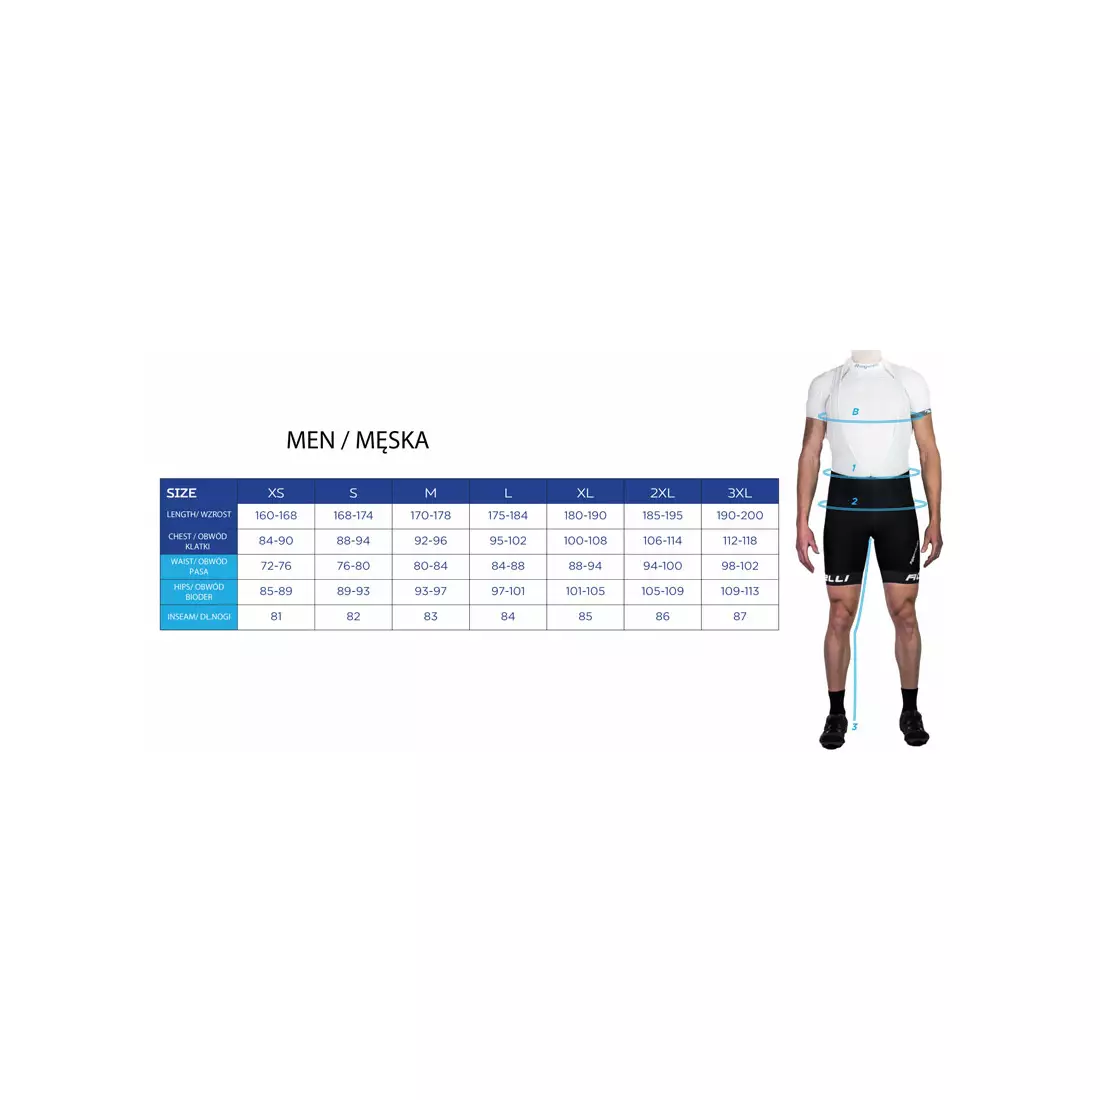 ROGELLI TRI FLORIDA 030.001 men's triathlon outfit, red and black